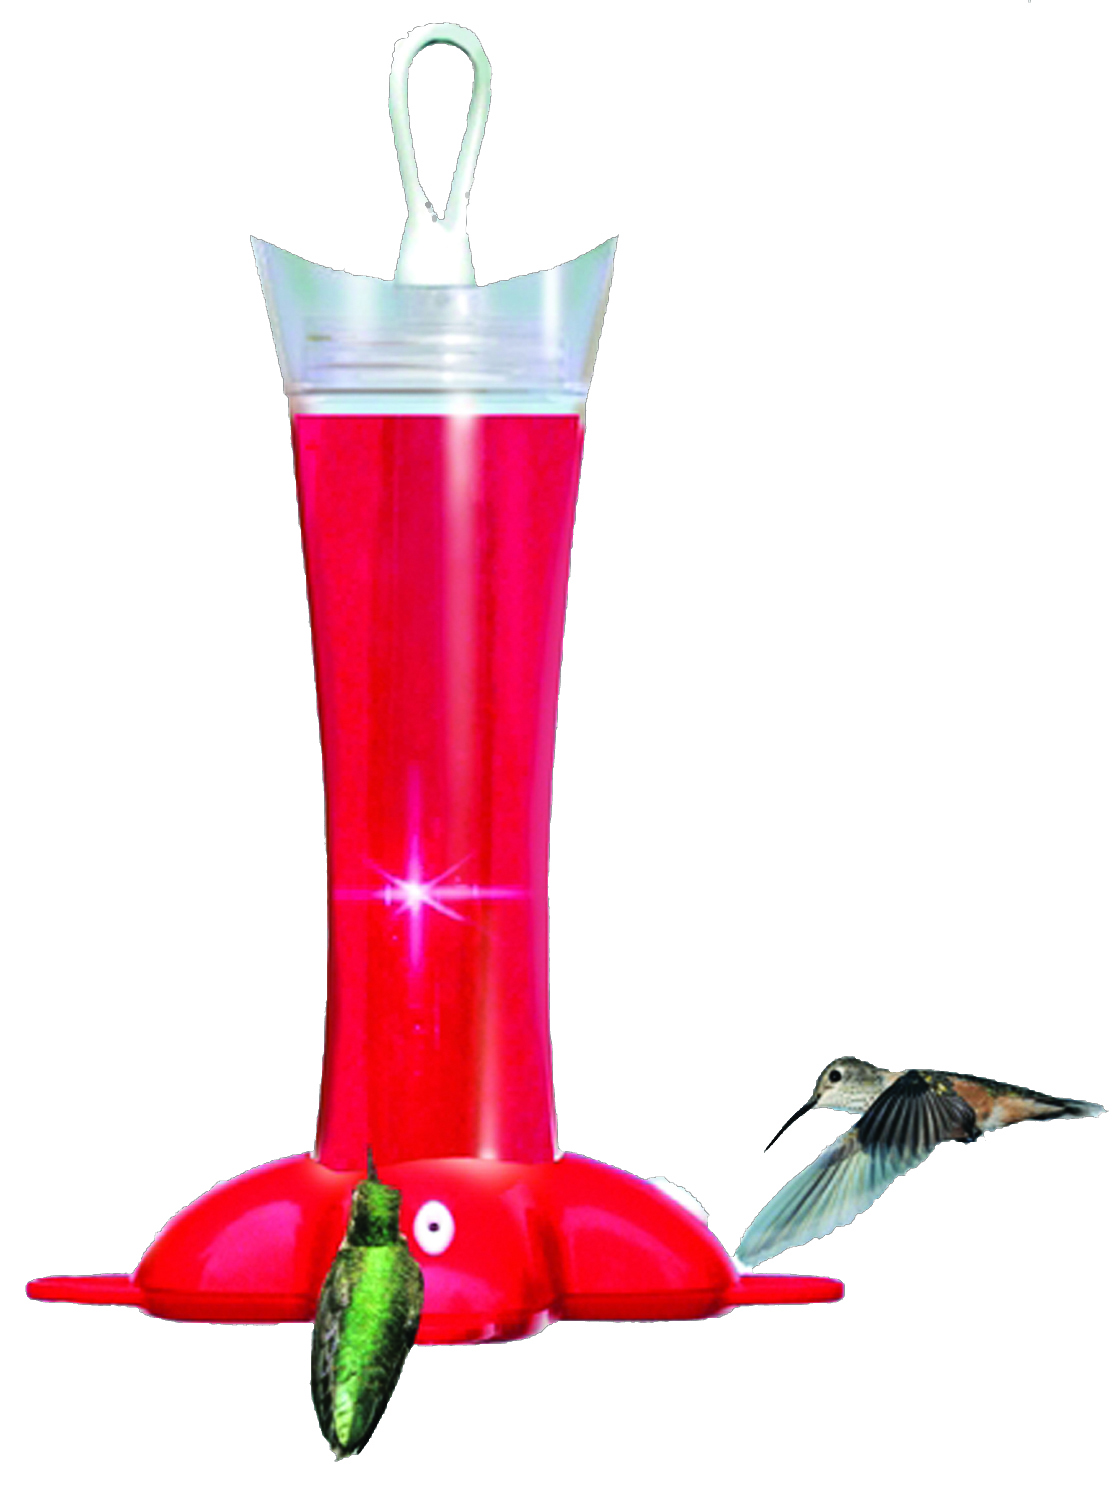 Glass Hummingbird Feeder